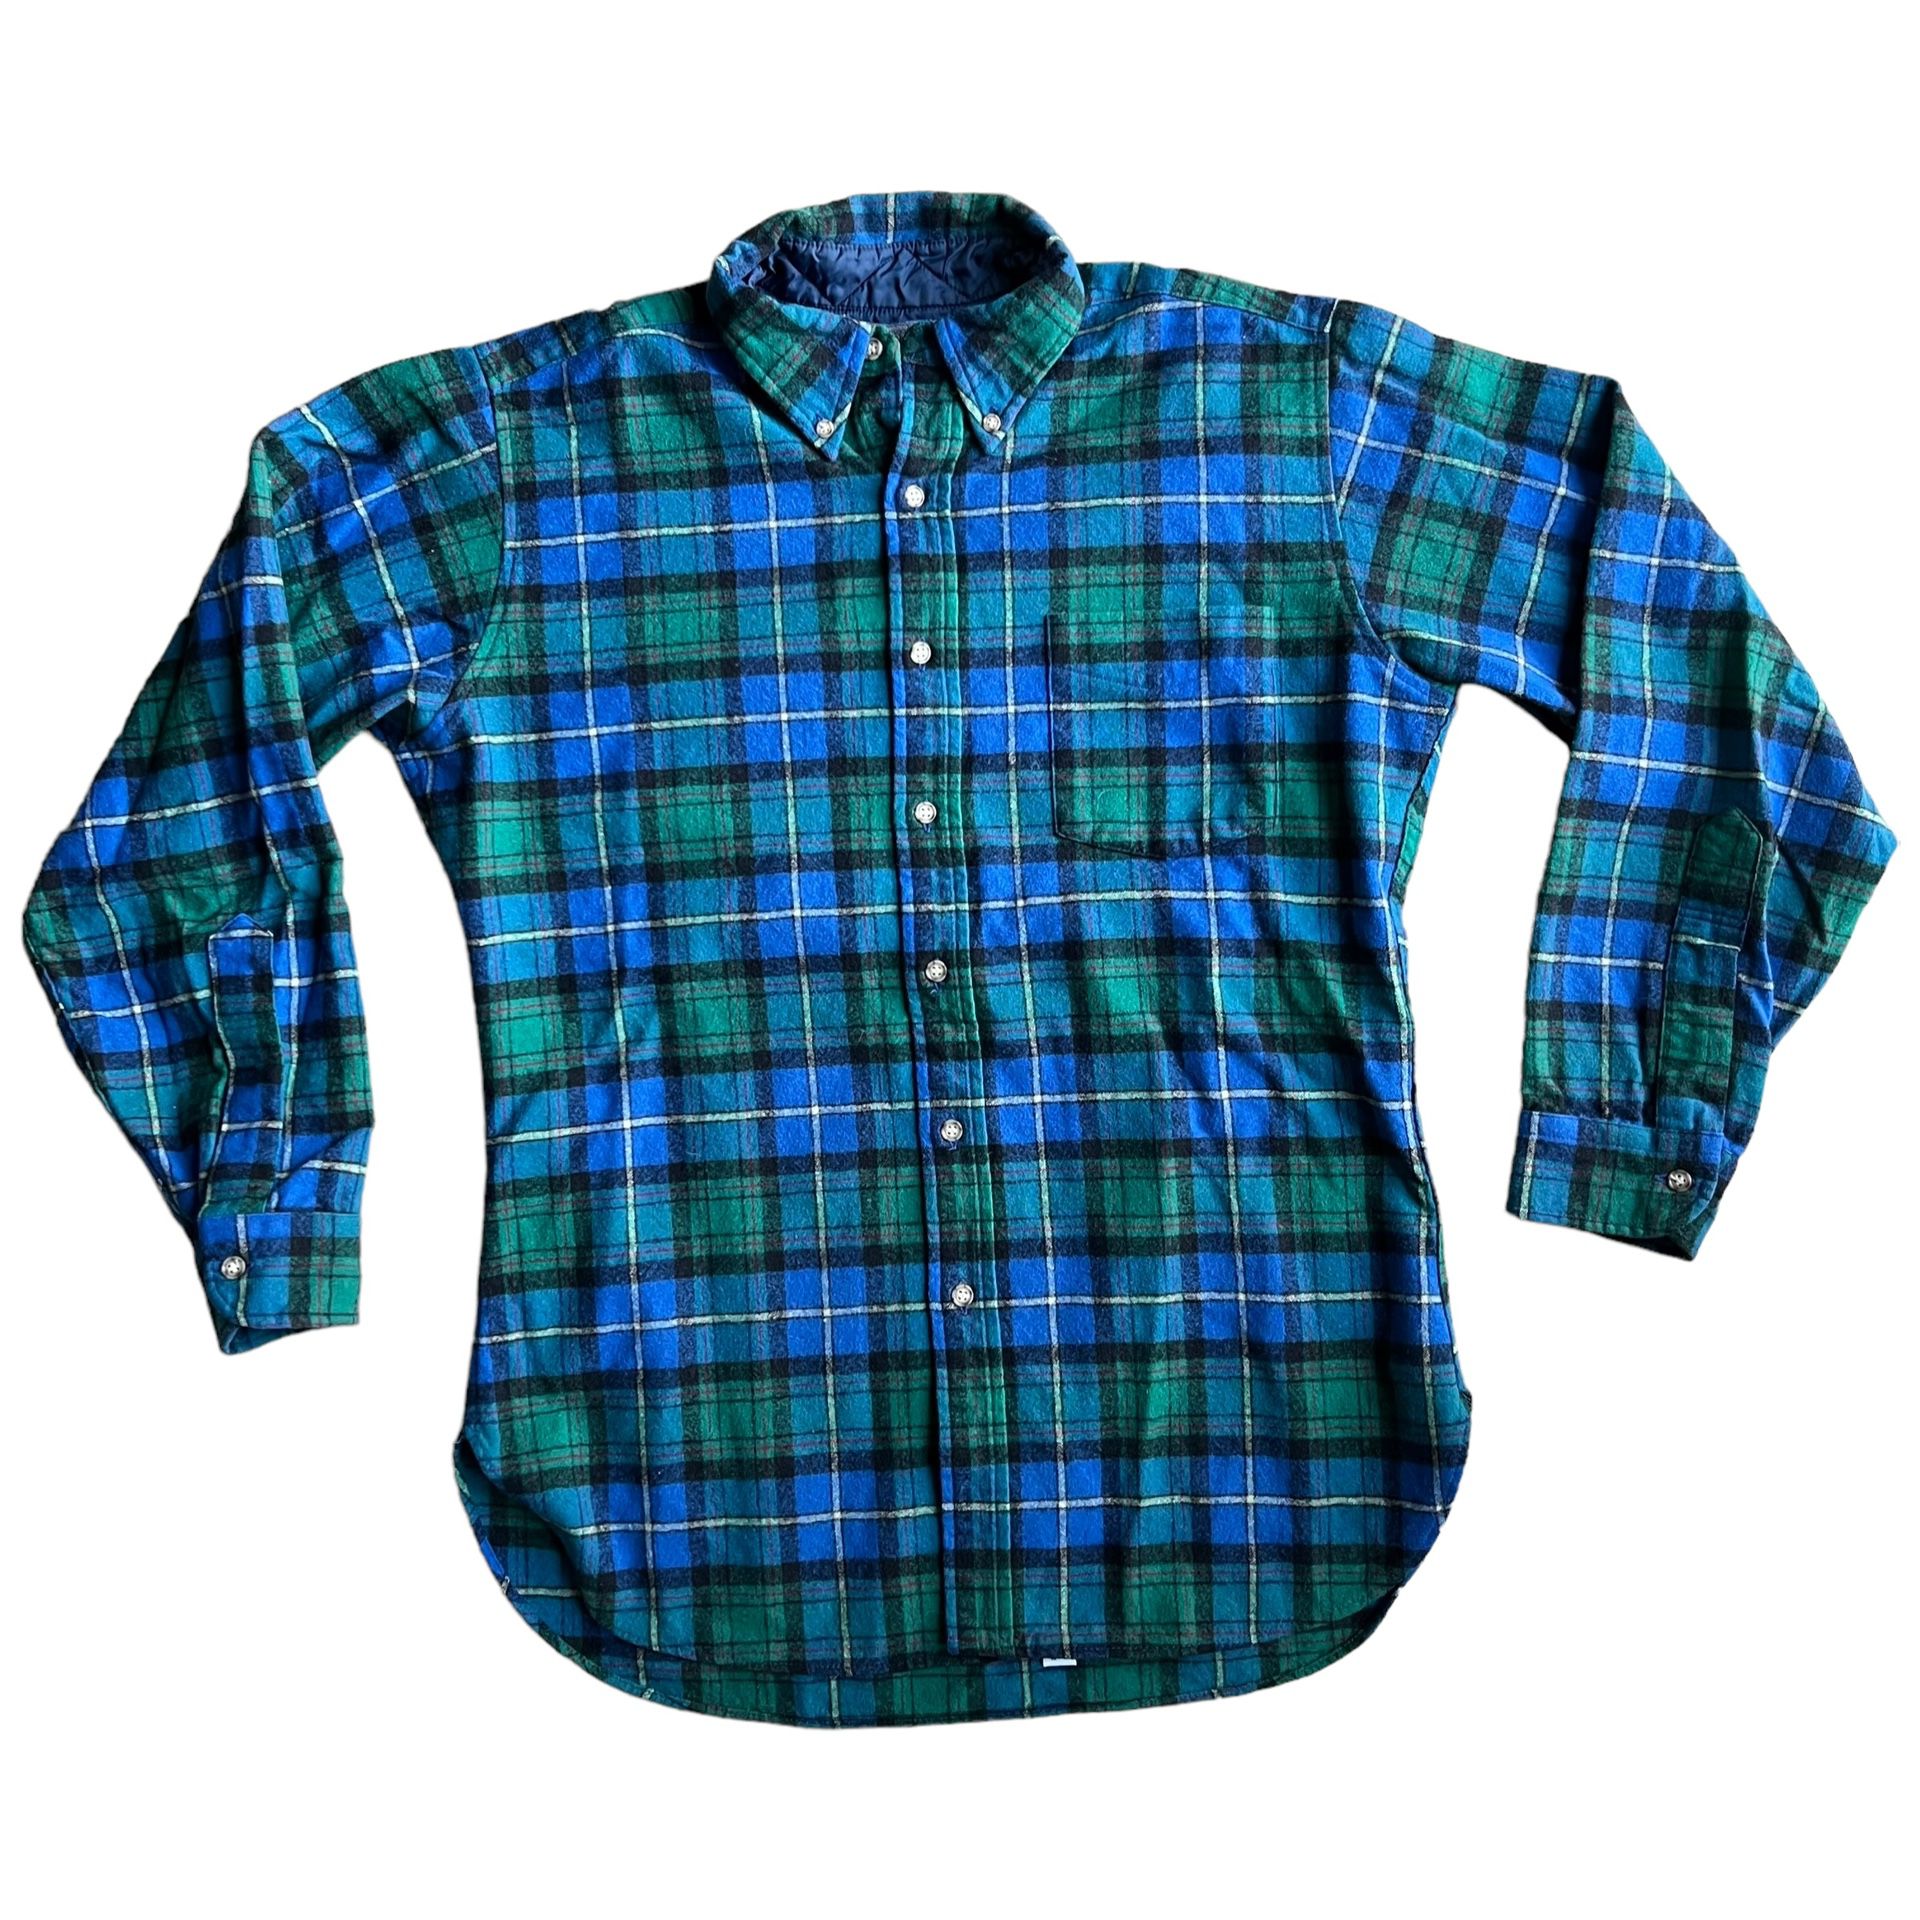 Vintage Pendleton Woolen Mills Long-Sleeve Plaid Shirt Mens Sz M Blue/Green/Red